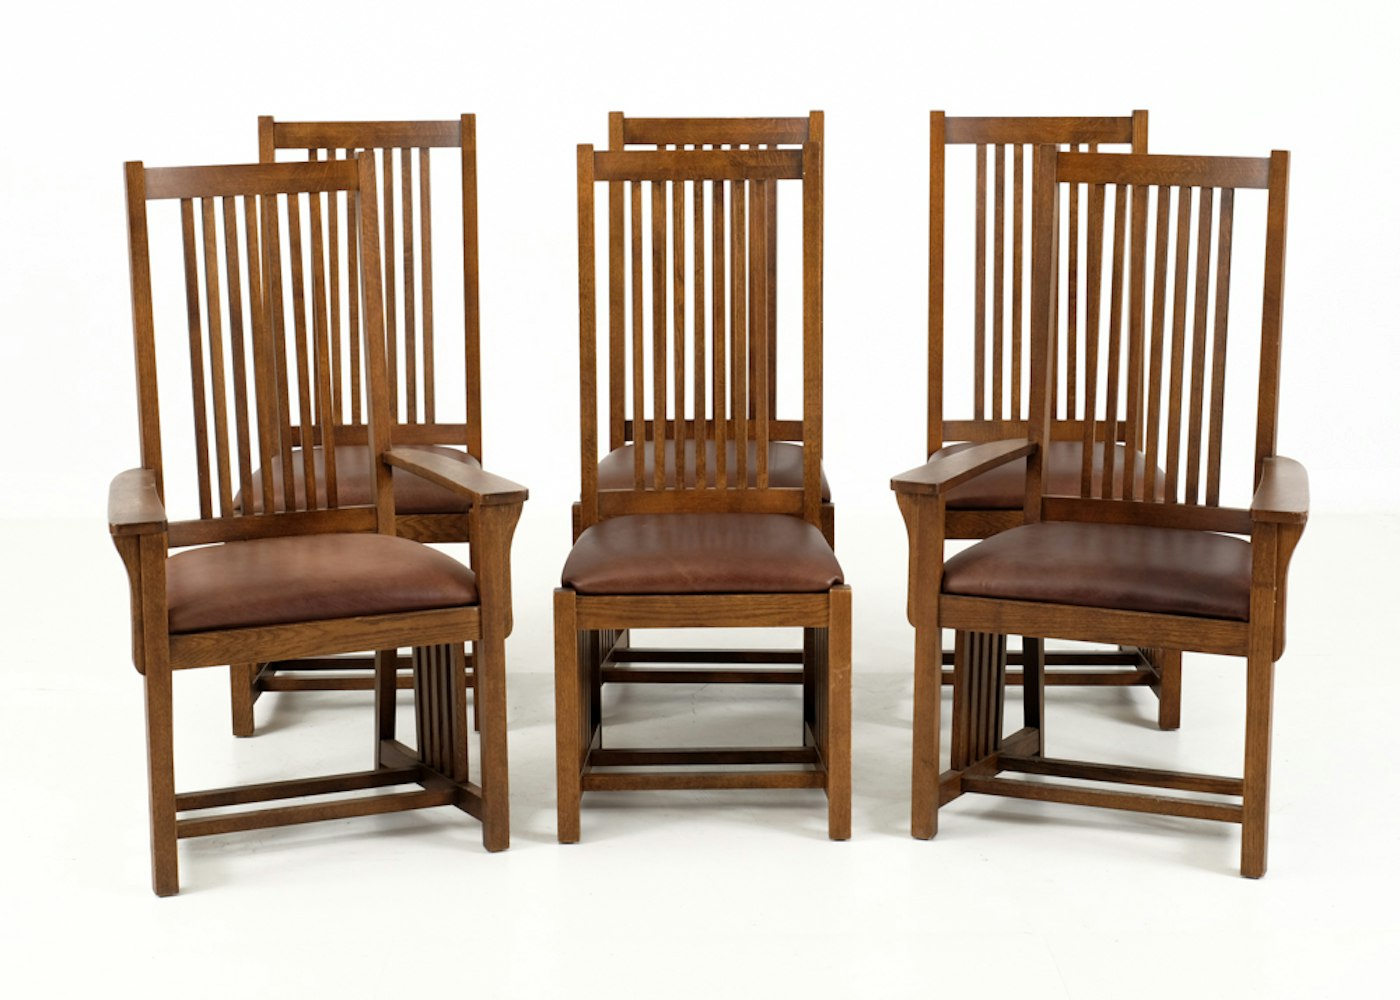 Frank Lloyd Wright - Prairie Style Oak Table and Six Chairs | EBTH